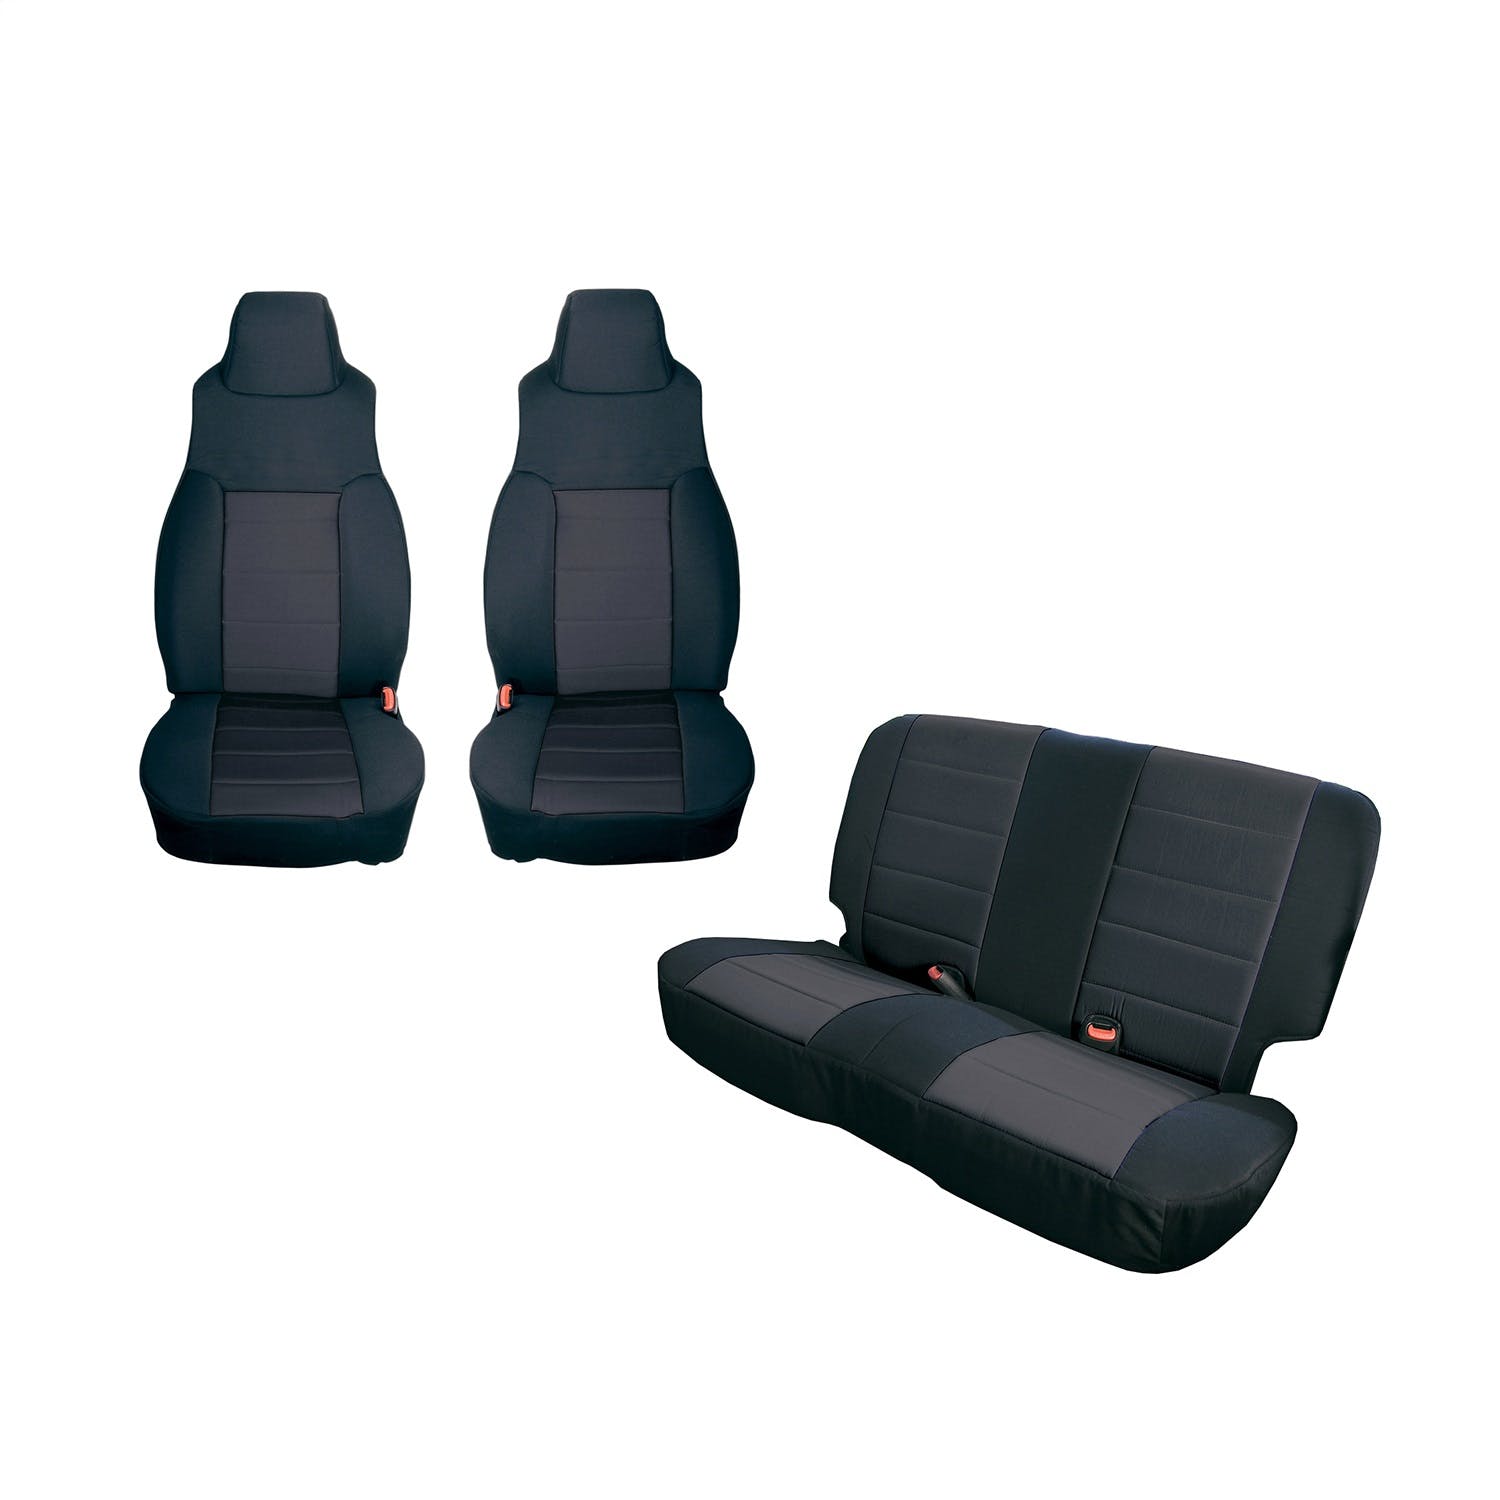 Rugged Ridge 13292.01 Seat Cover Kit, Black